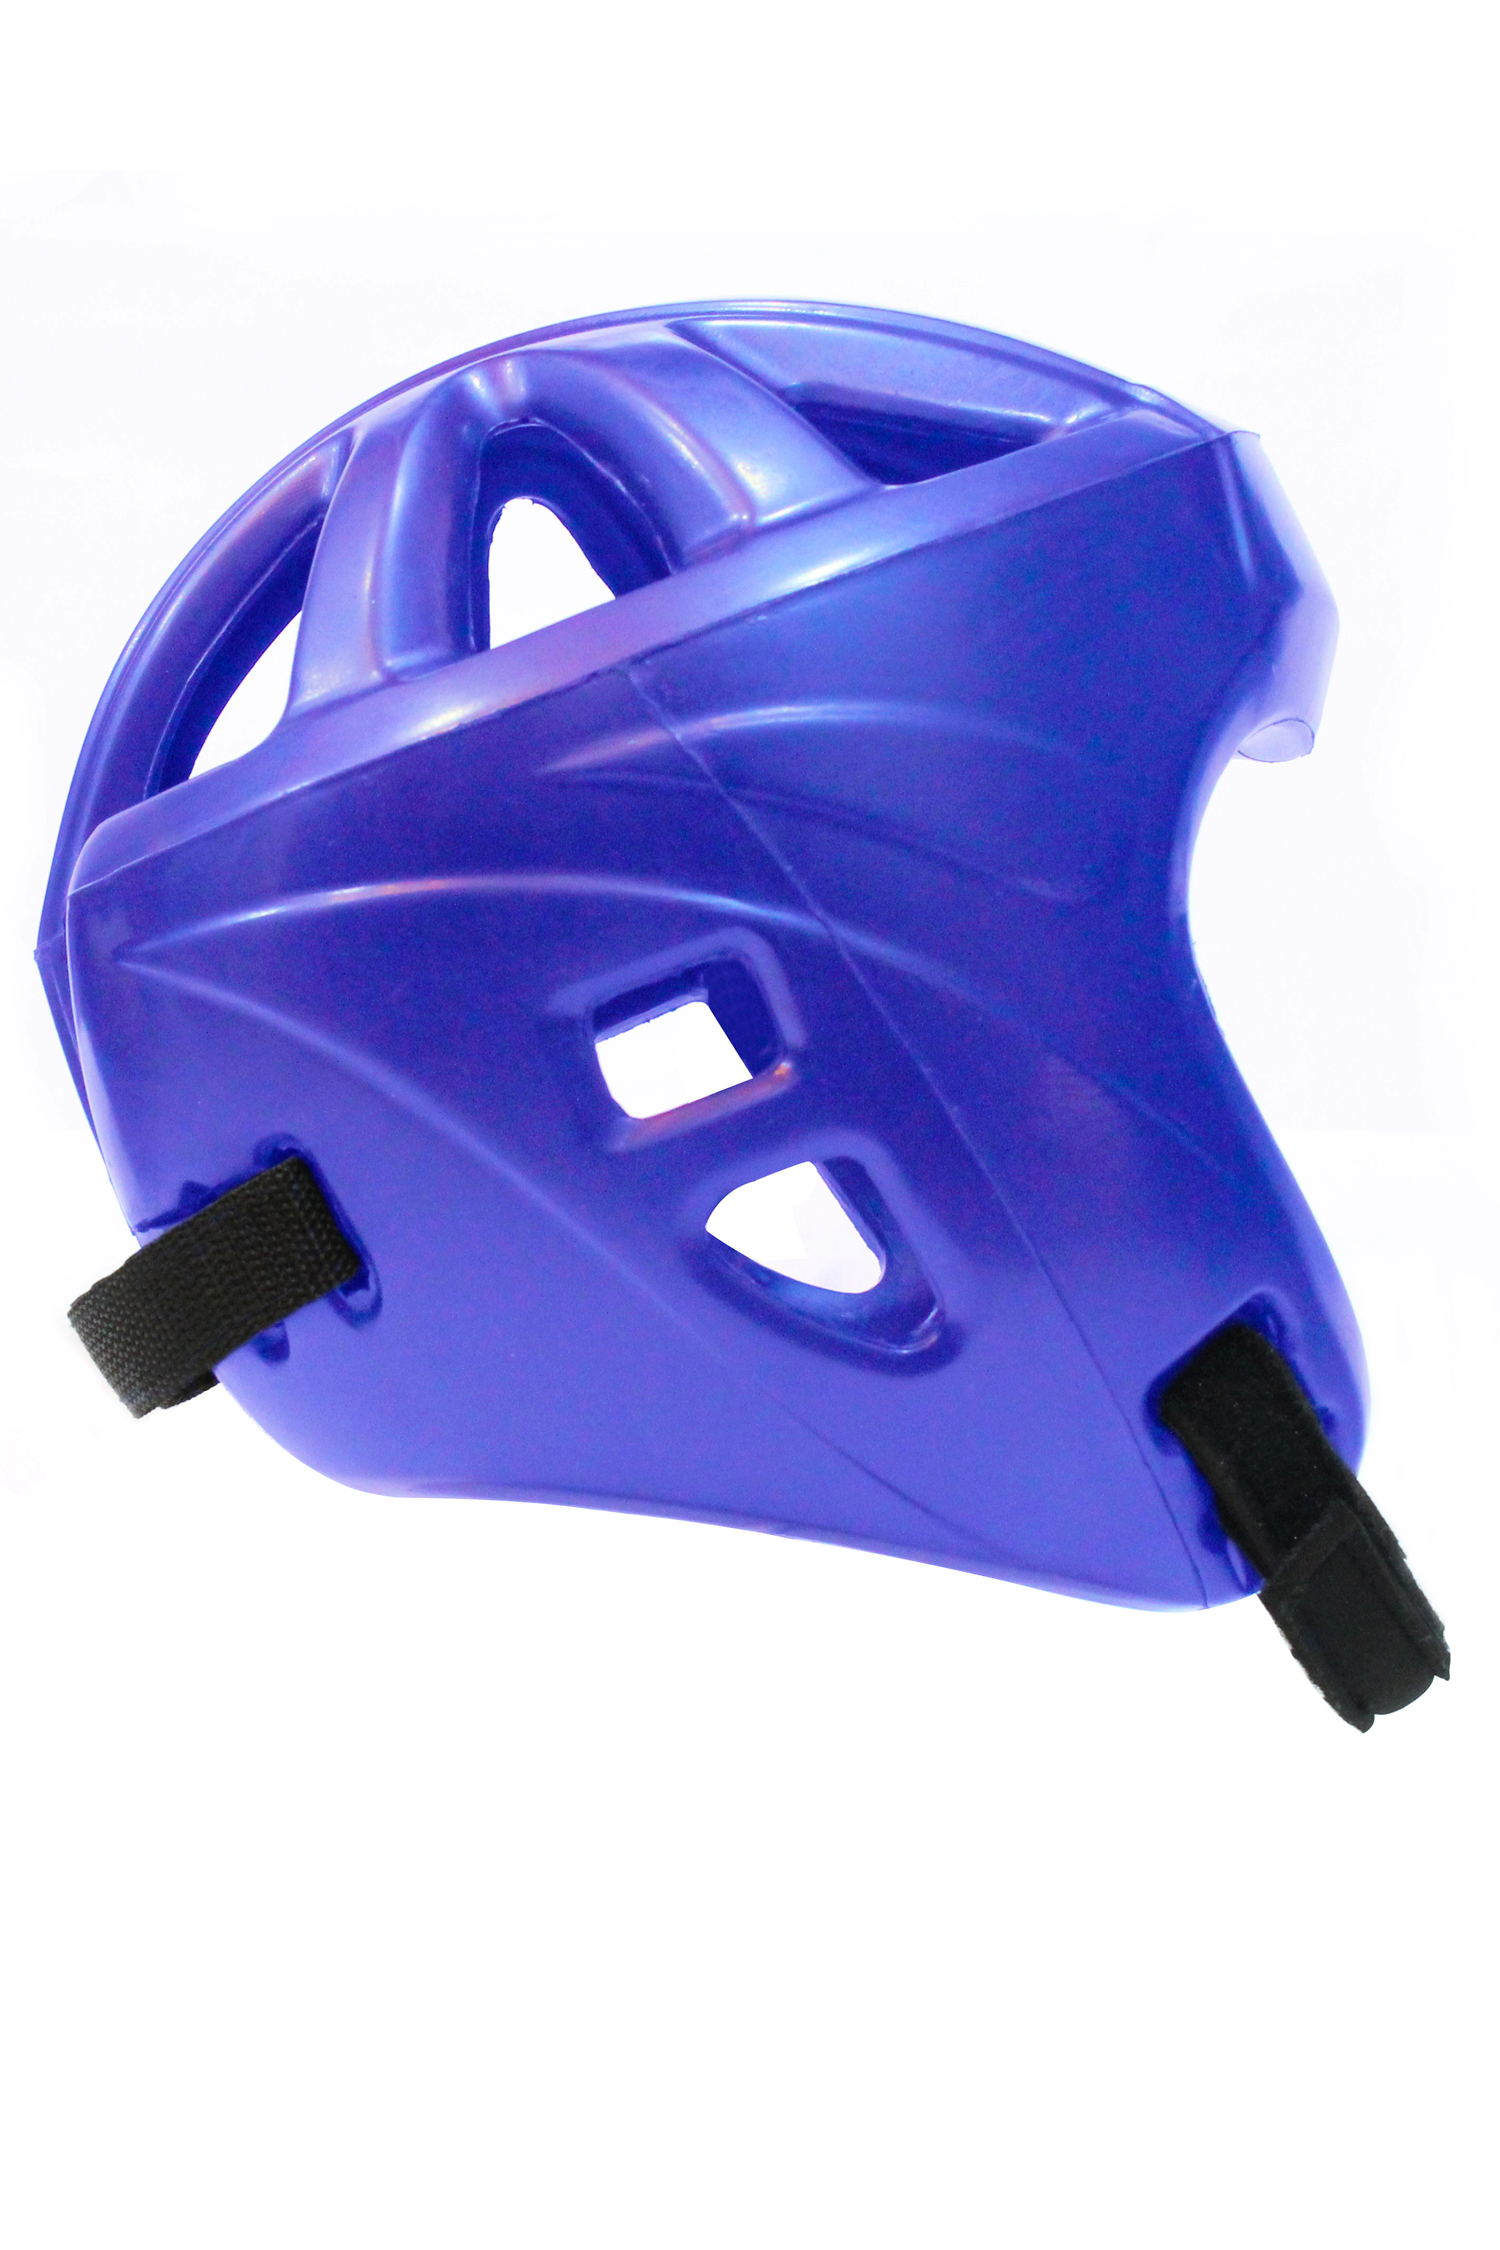 Fornecedor de capacete de novo estilo de poliuretano PU da China Fábrica de capacete de boxe leve da China Fabricante de capacete de boxe anti-impacto da China